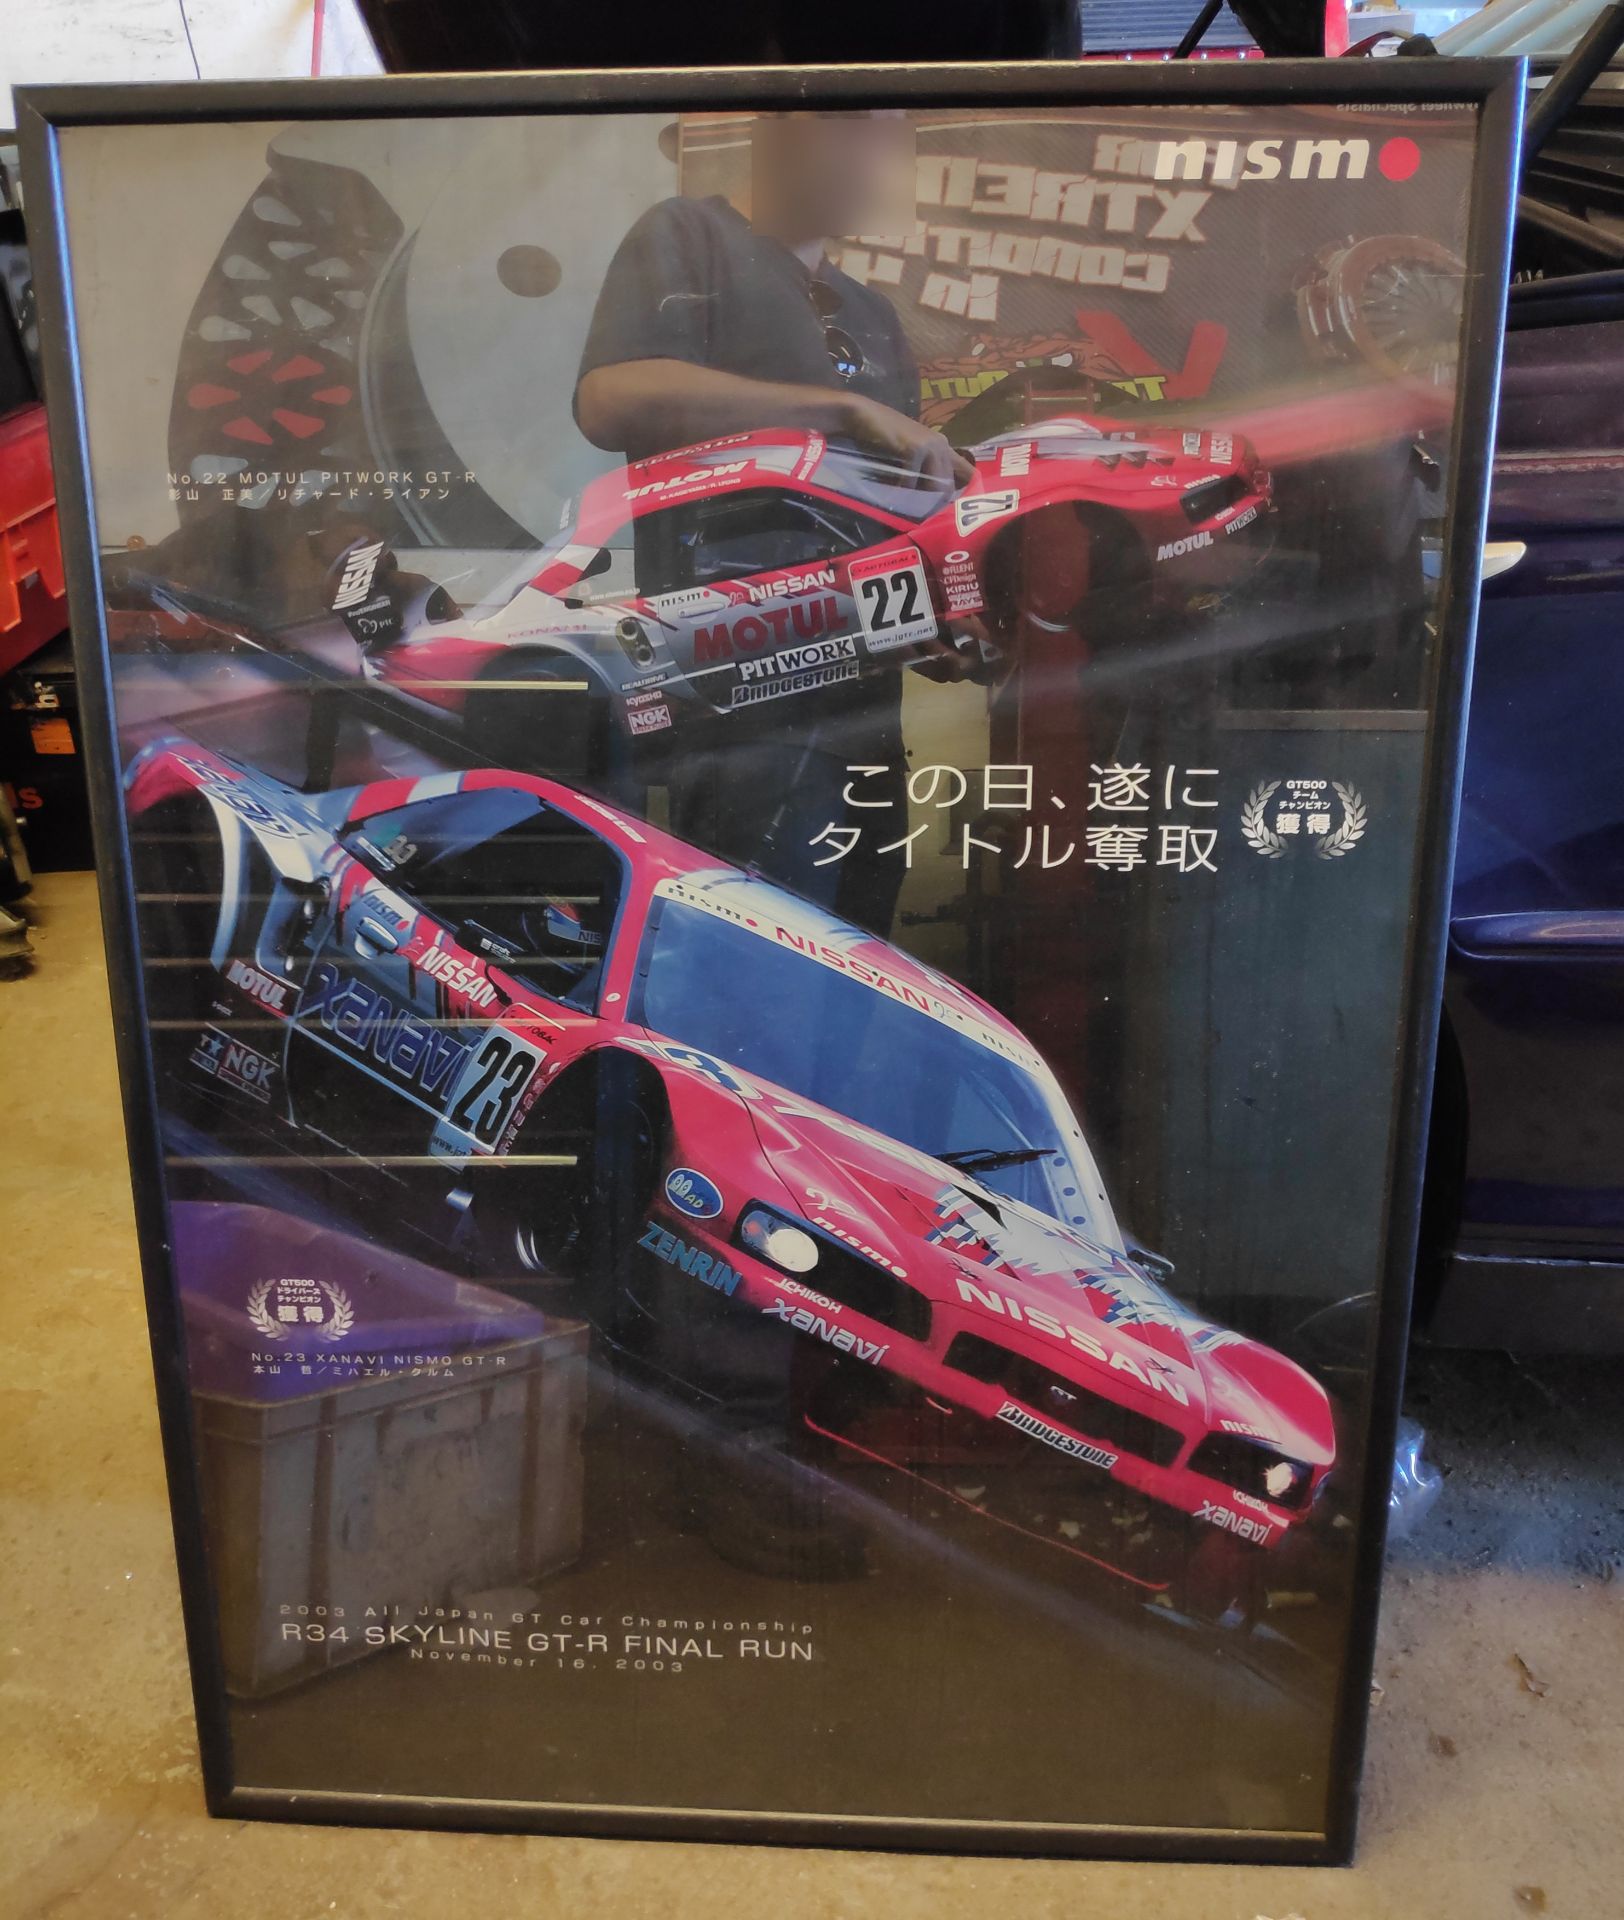 1 x Large Framed Nismo Motul Nissan Skyline R34 GT-R Poster - CL682 - Location: Bedford - Image 7 of 9